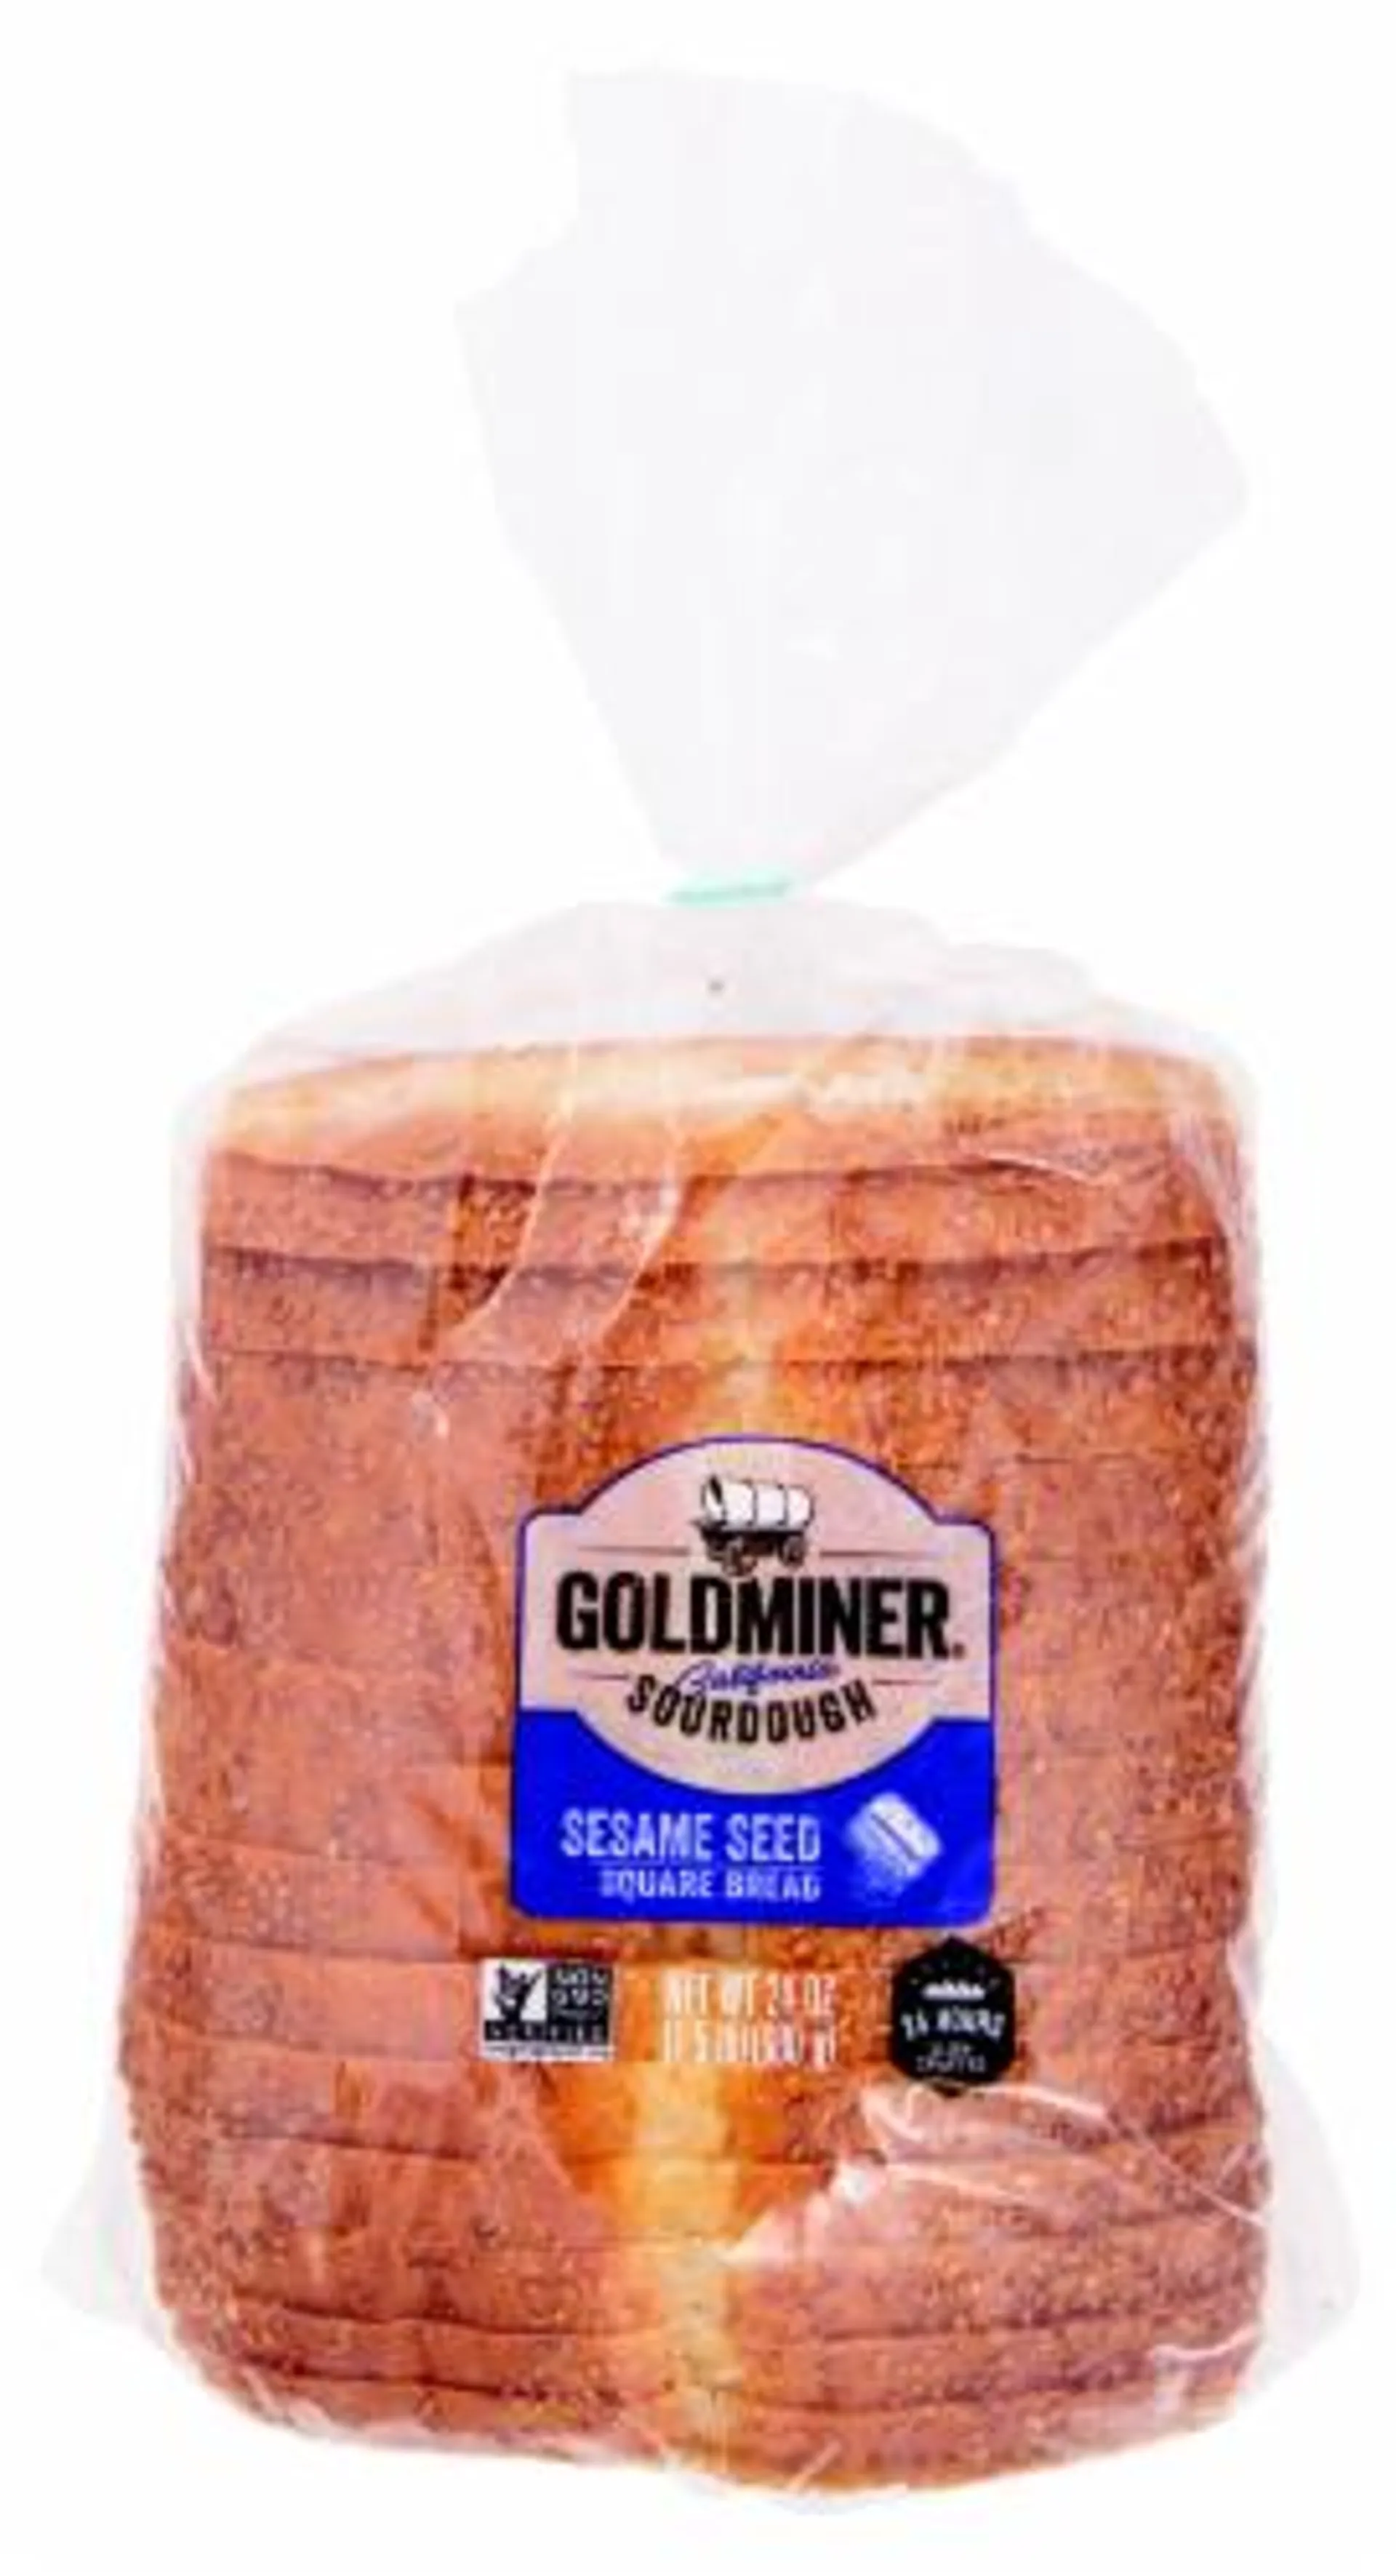 Goldminer California Sourdough Sesame Seed Square Bread